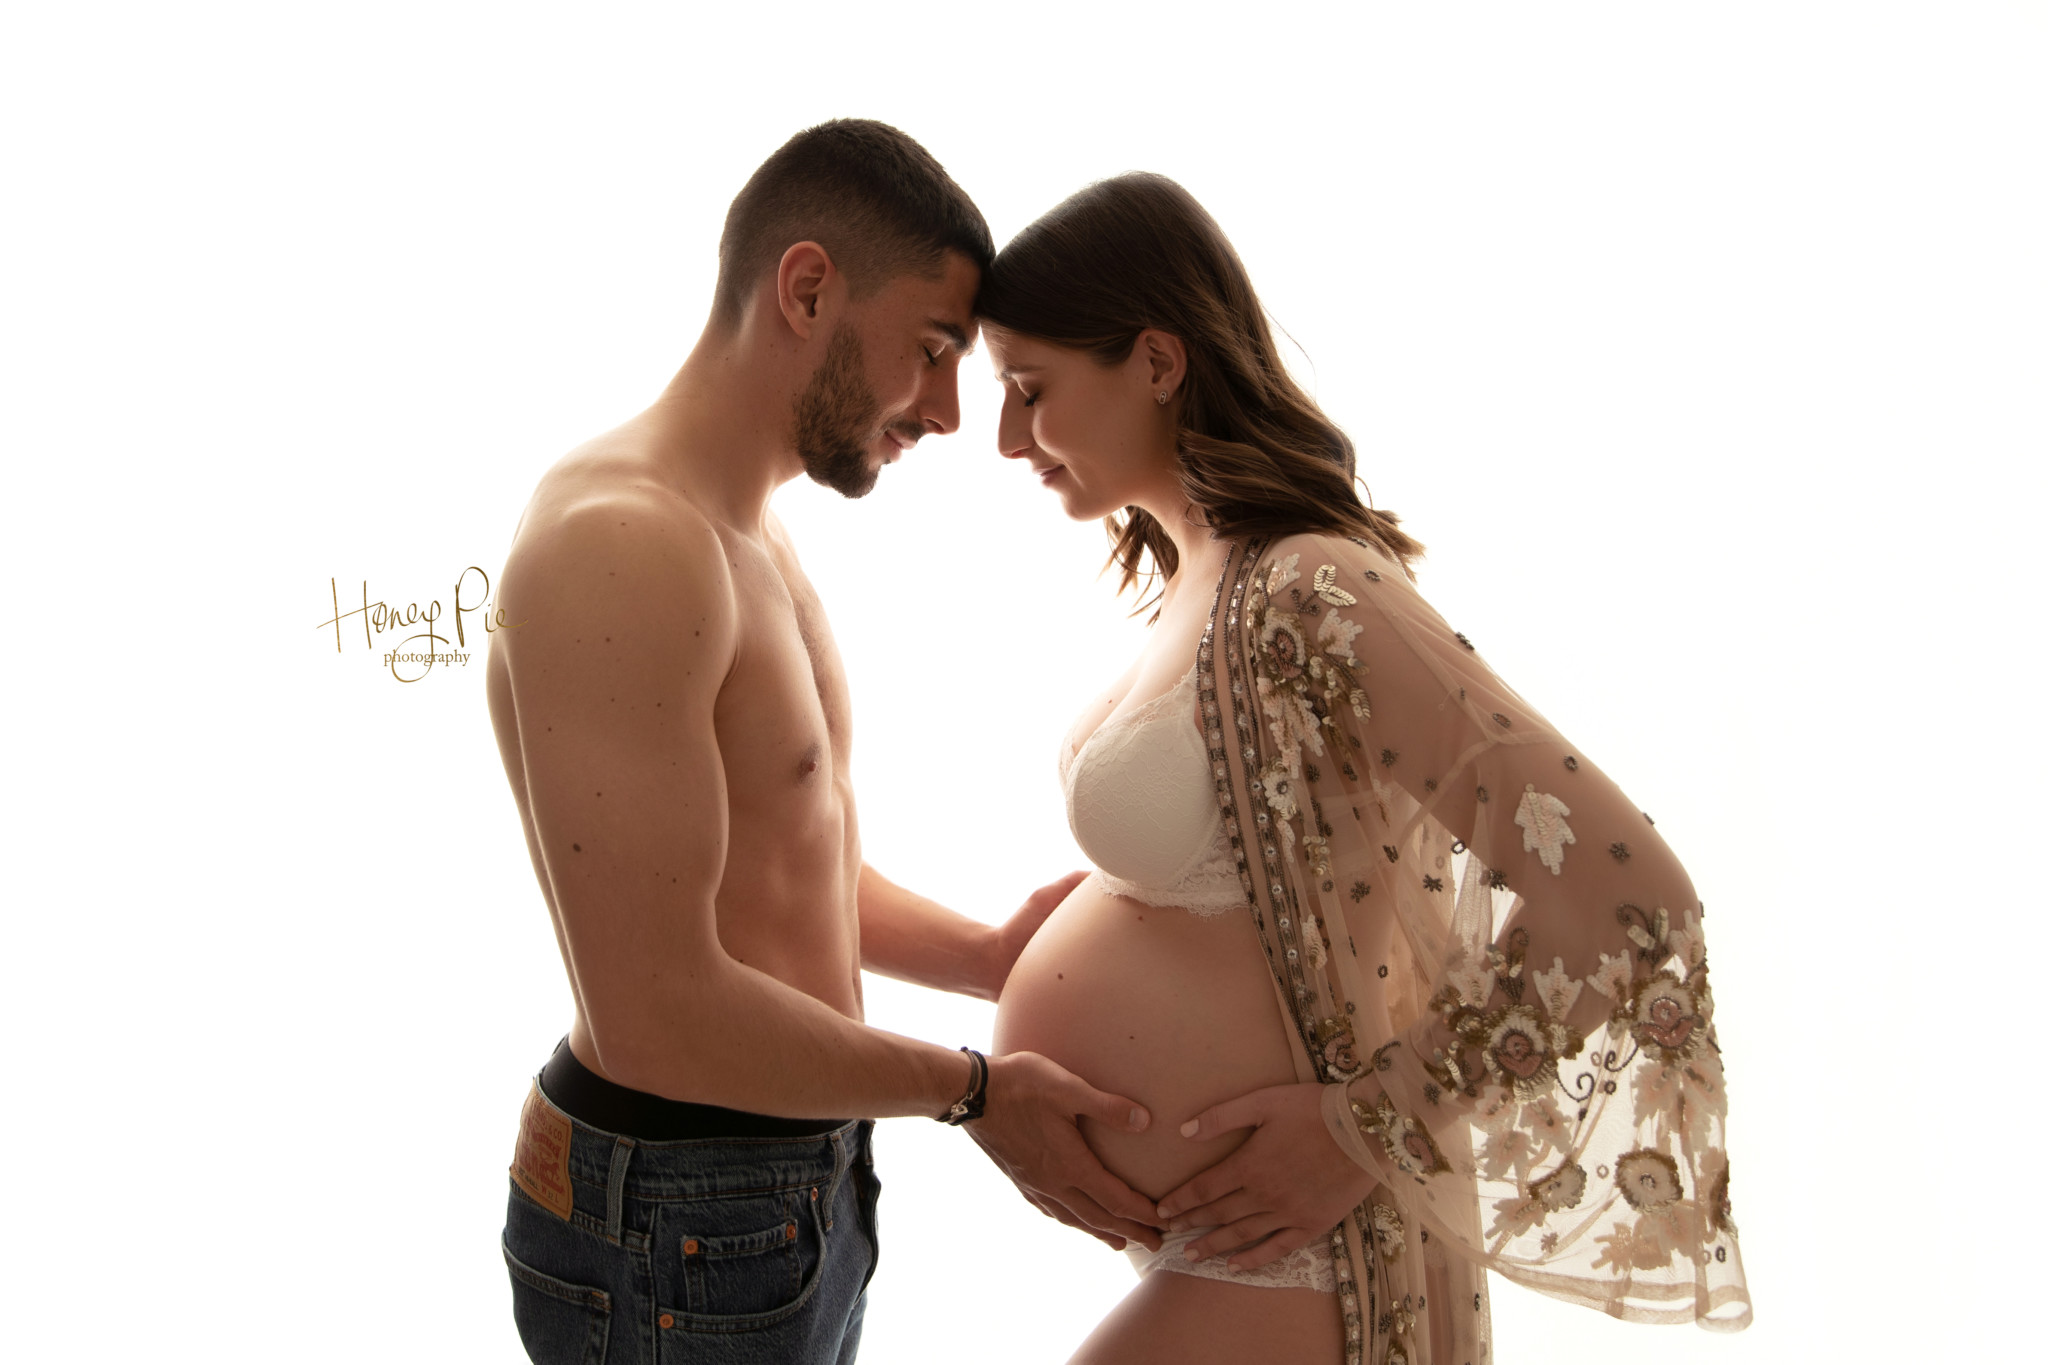 Neil Maupay at his Worthing Maternity Photographer photoshoot